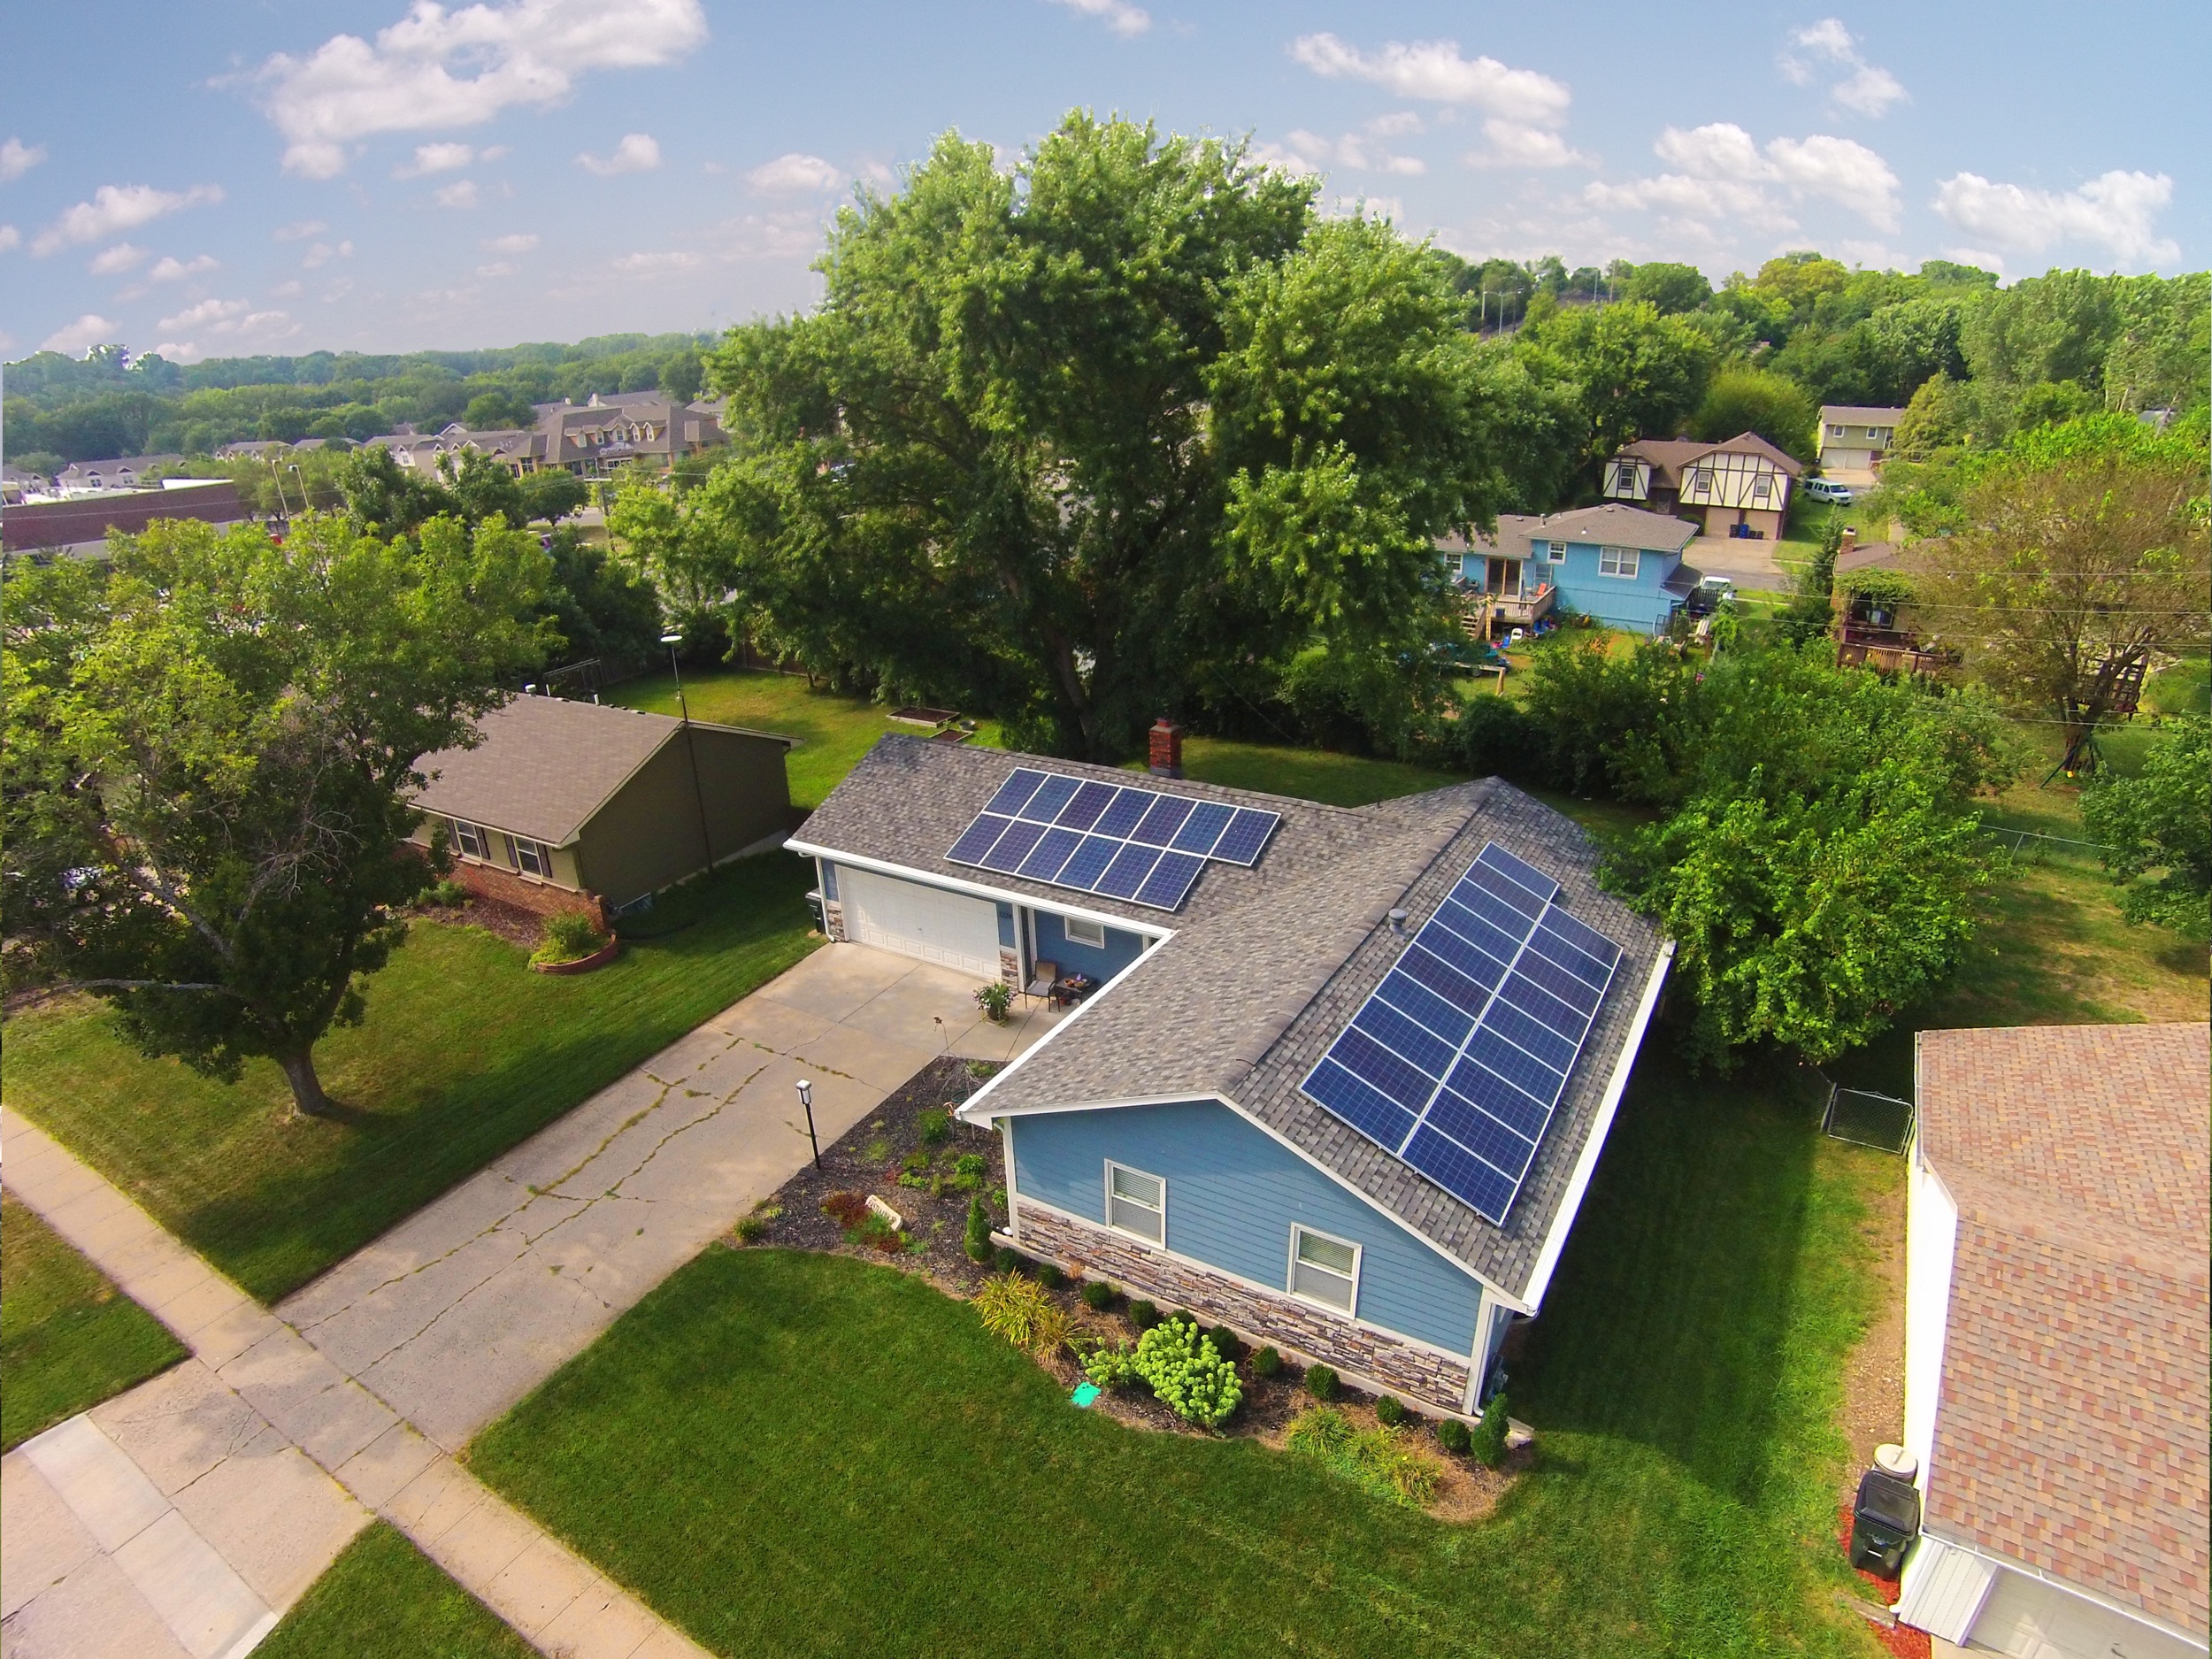 Residential solar array © 2015 Cromwell Environmental